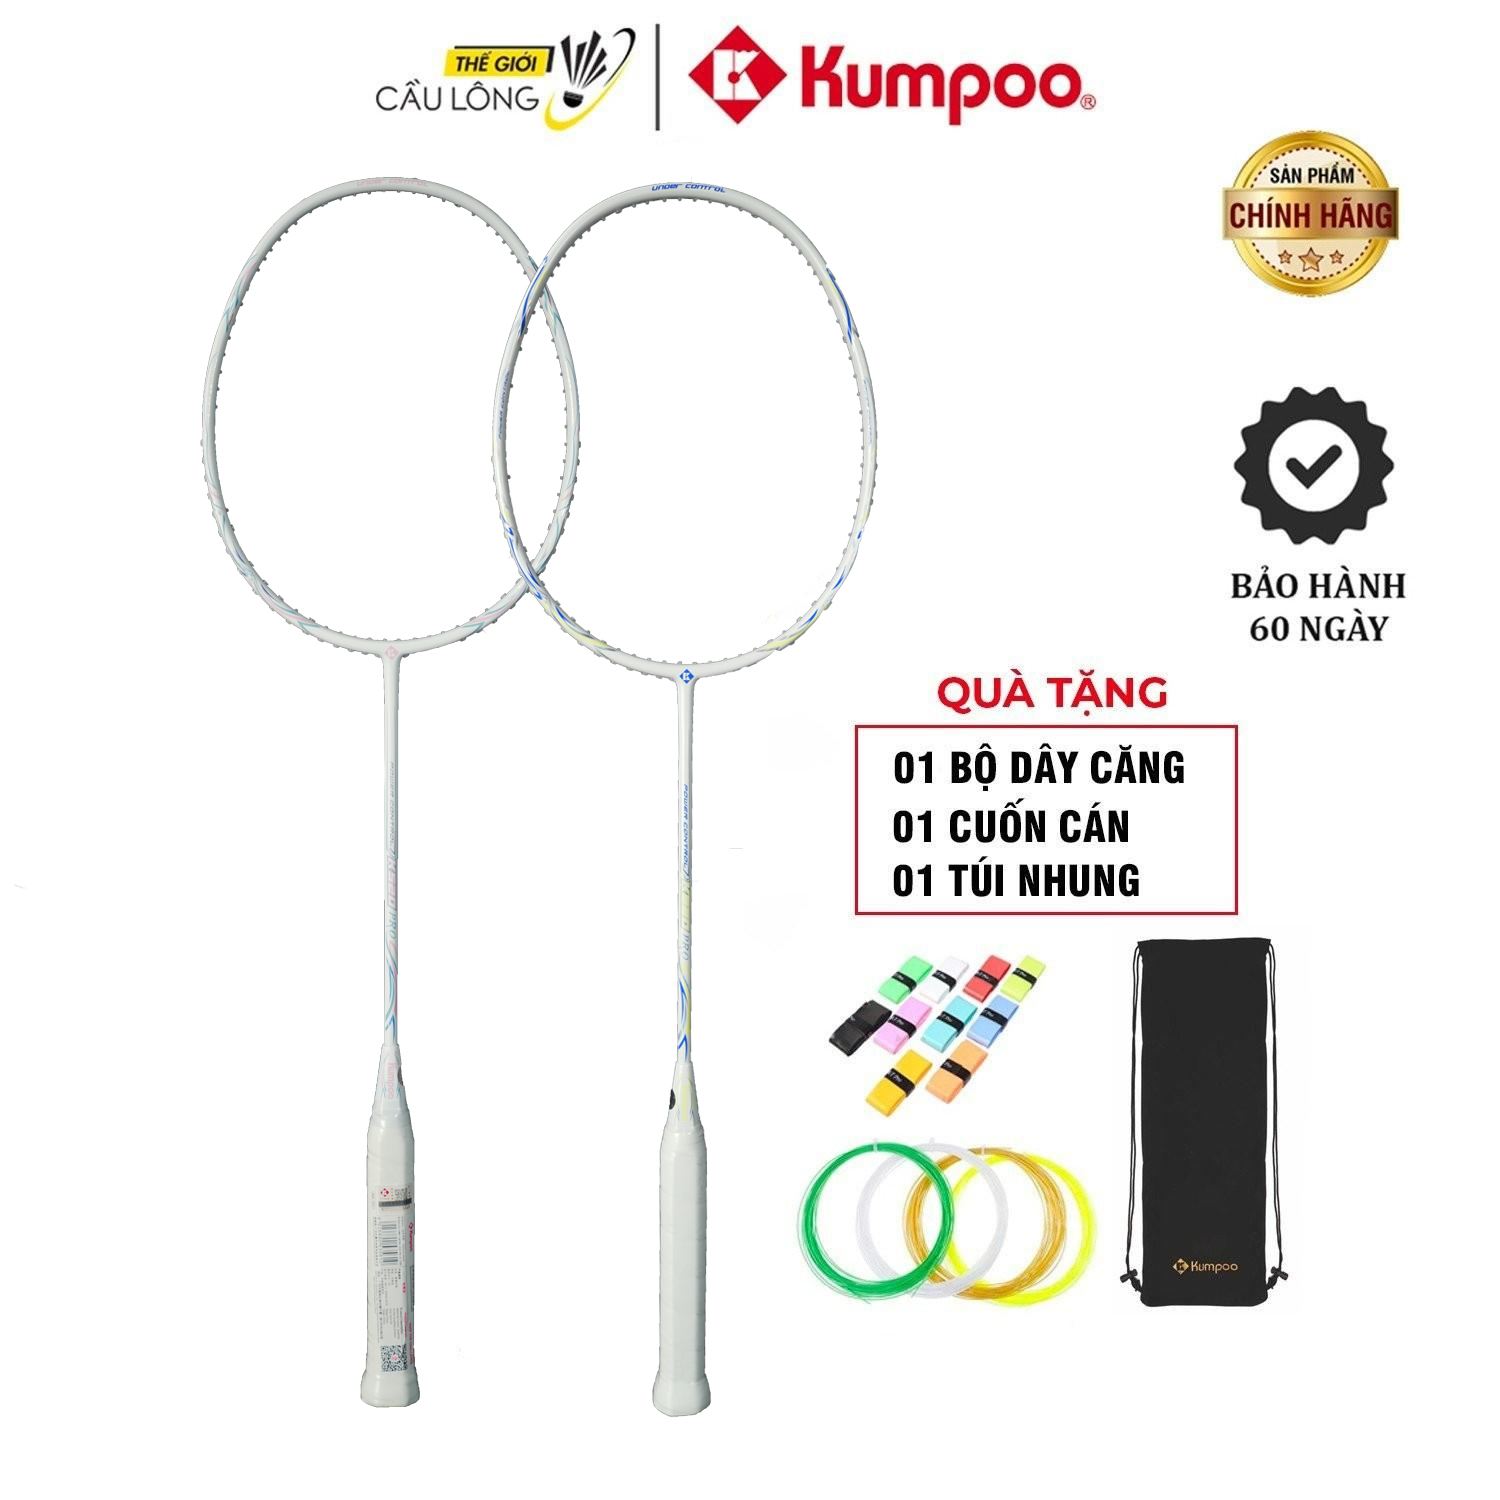 kumpoo power control k520 pro